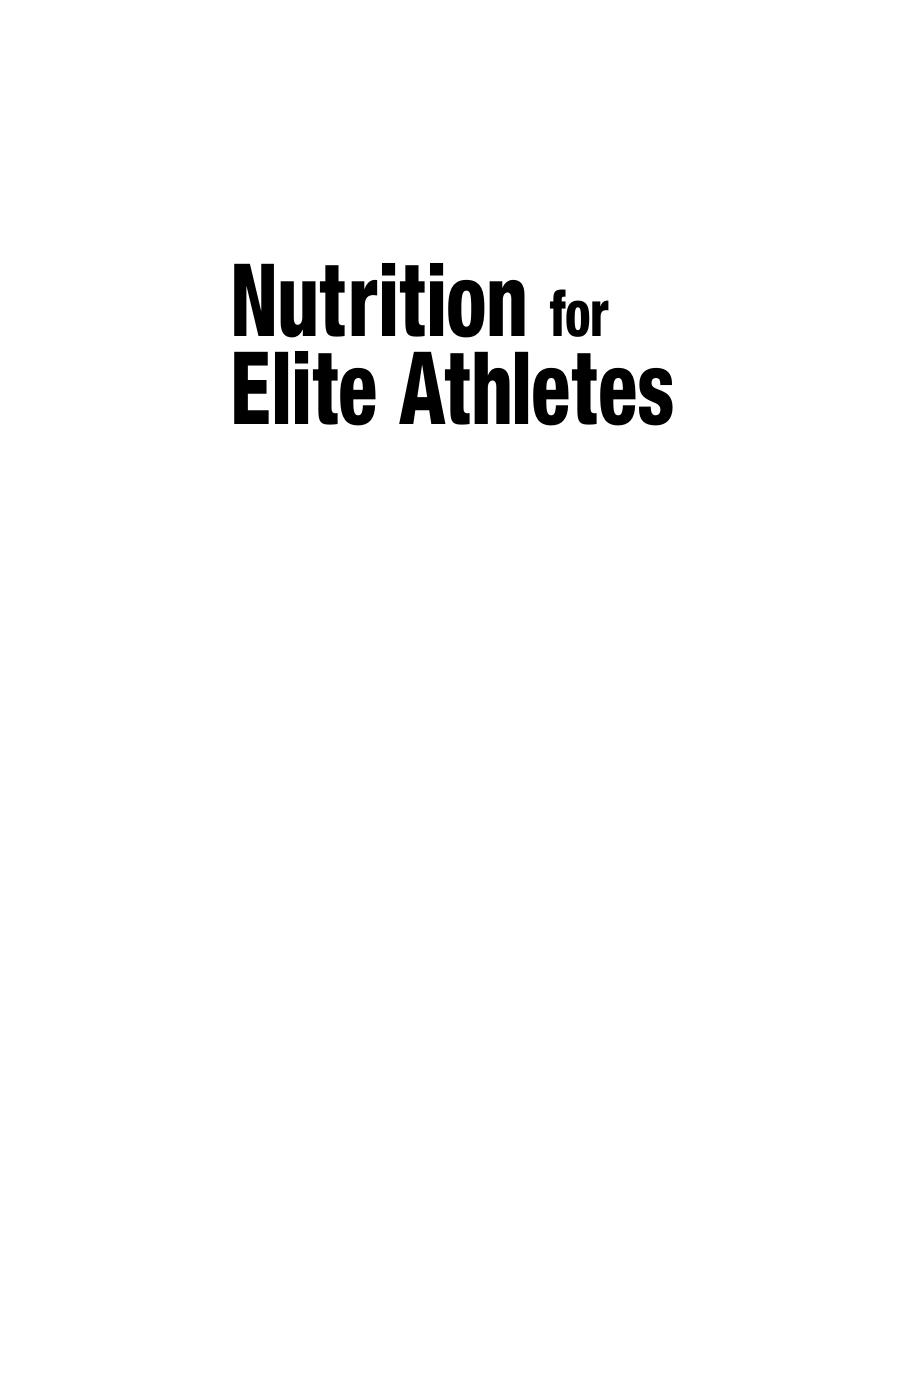 Nutrition for Elite Athletes 2016